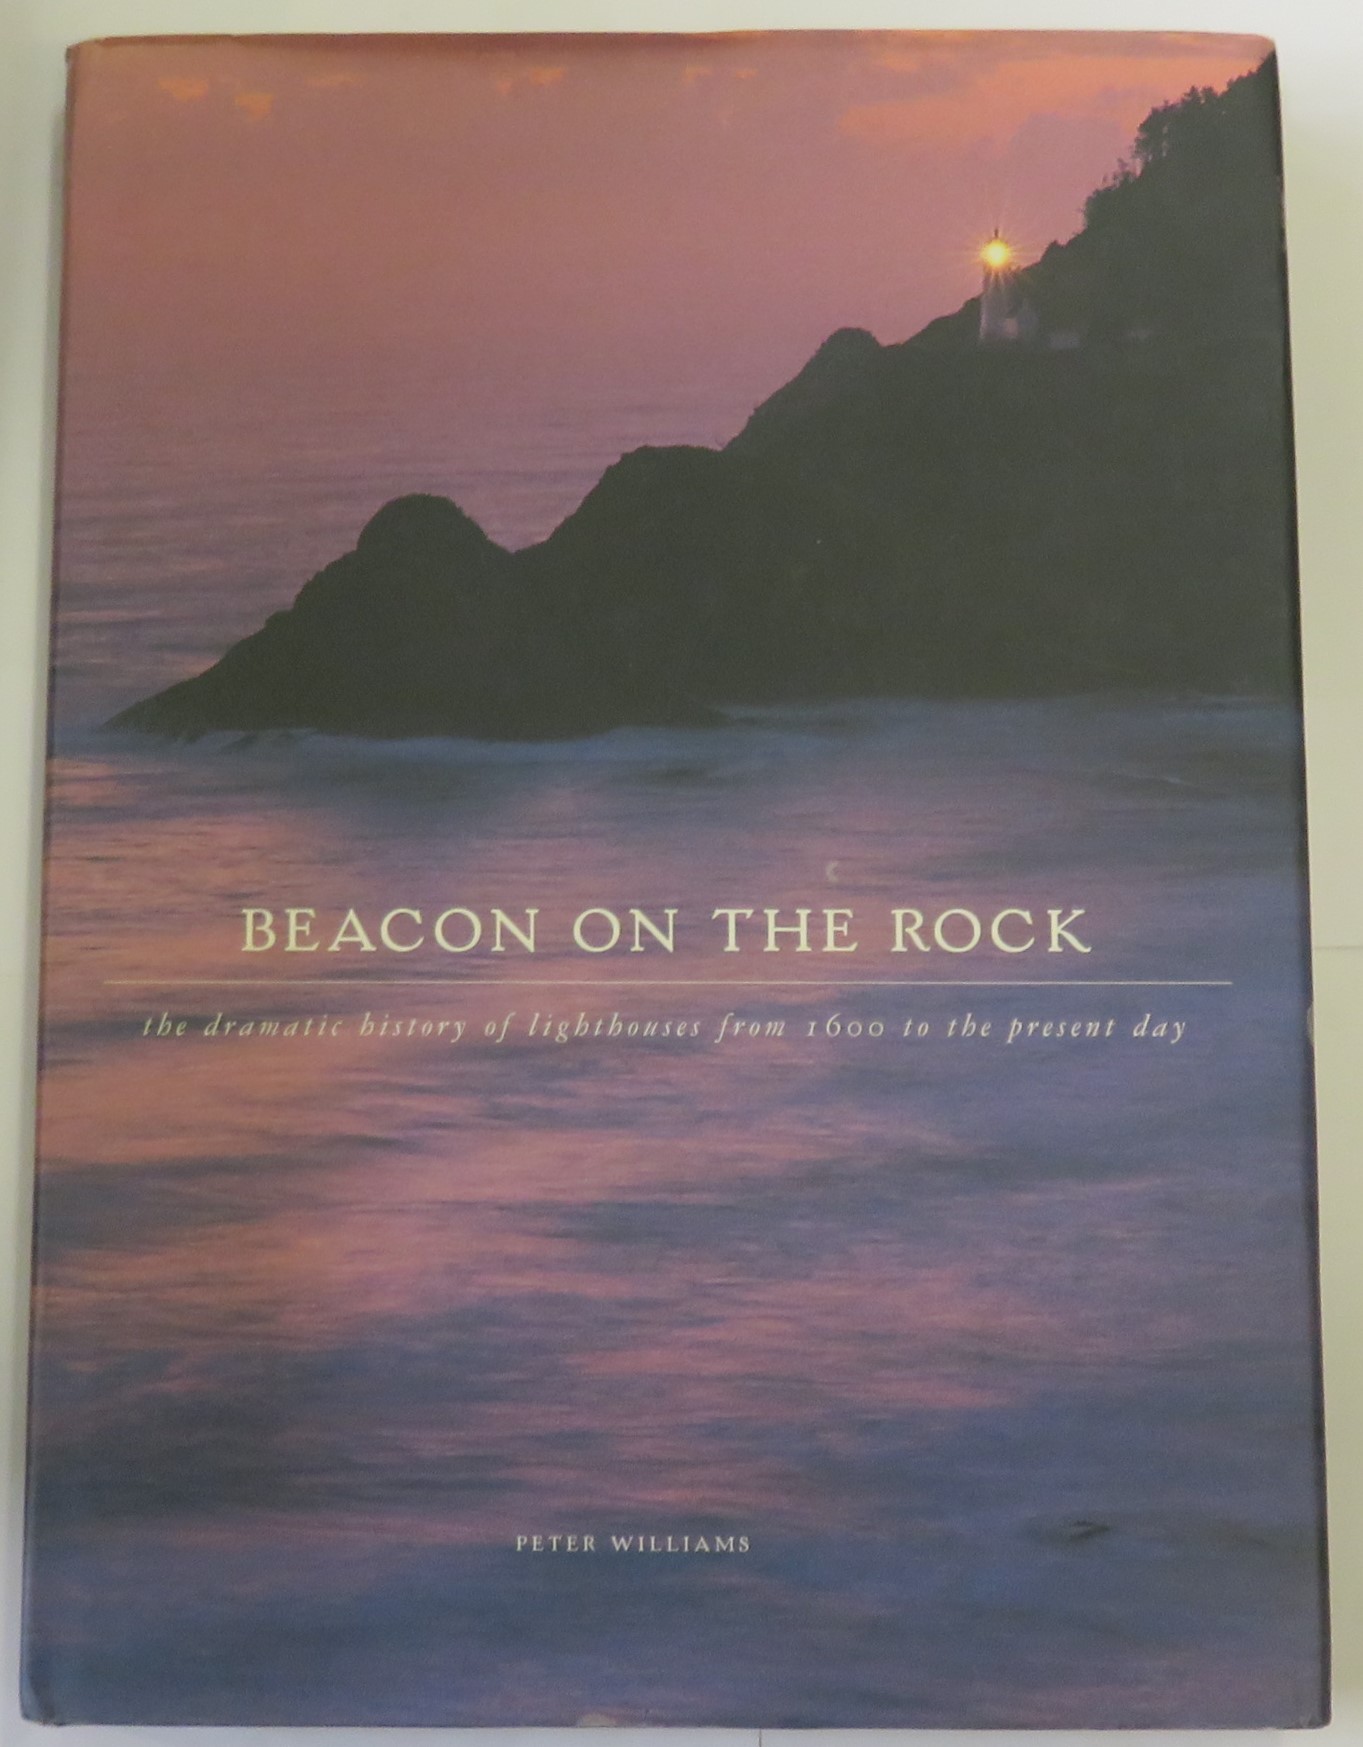 Beacon on the Rock